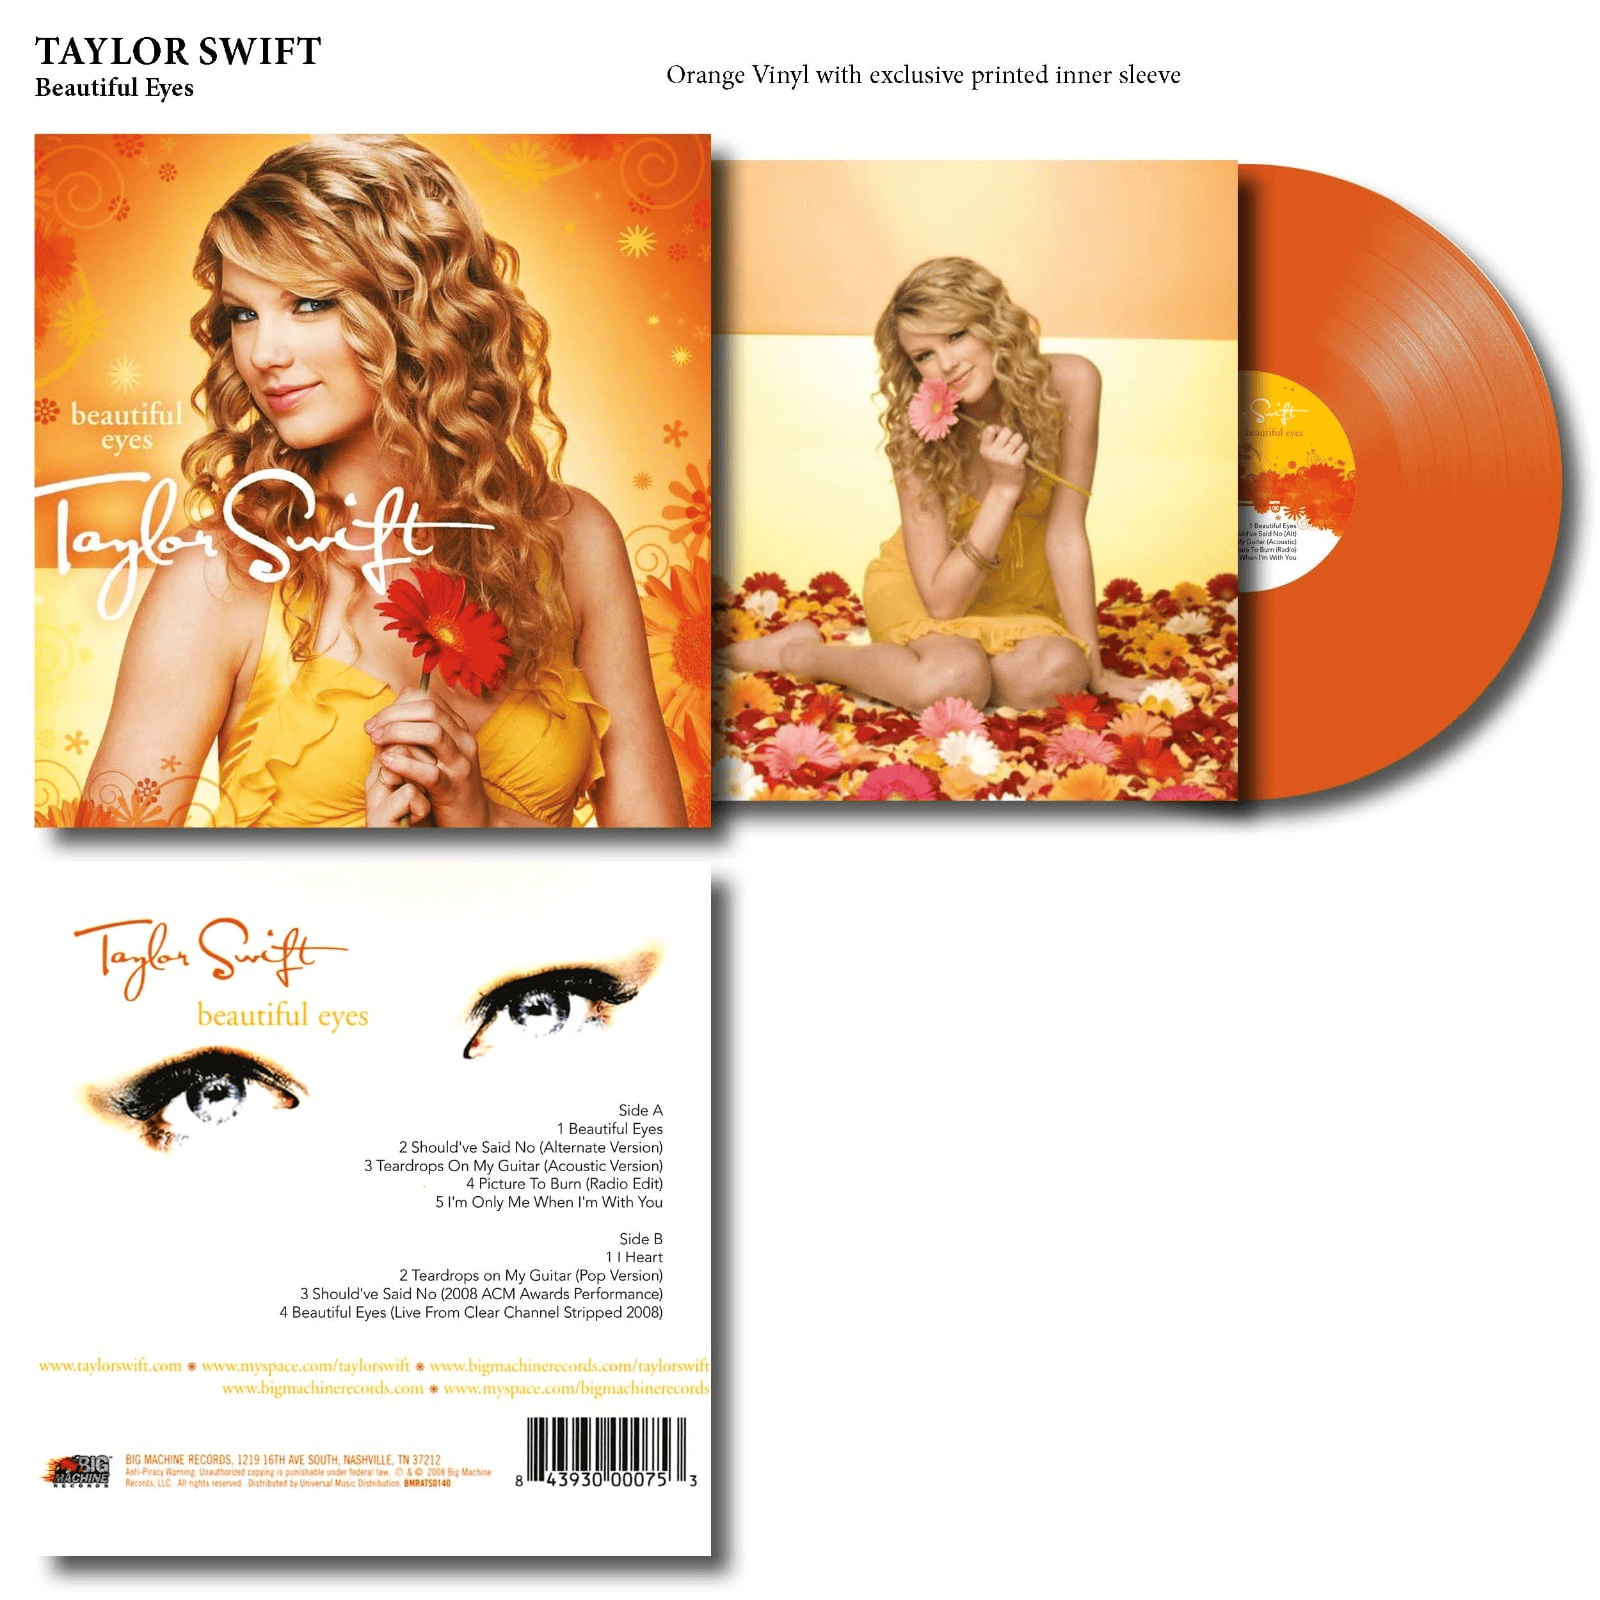 TAYLOR SWIFT - Beautiful Eyes Unofficial Vinyl